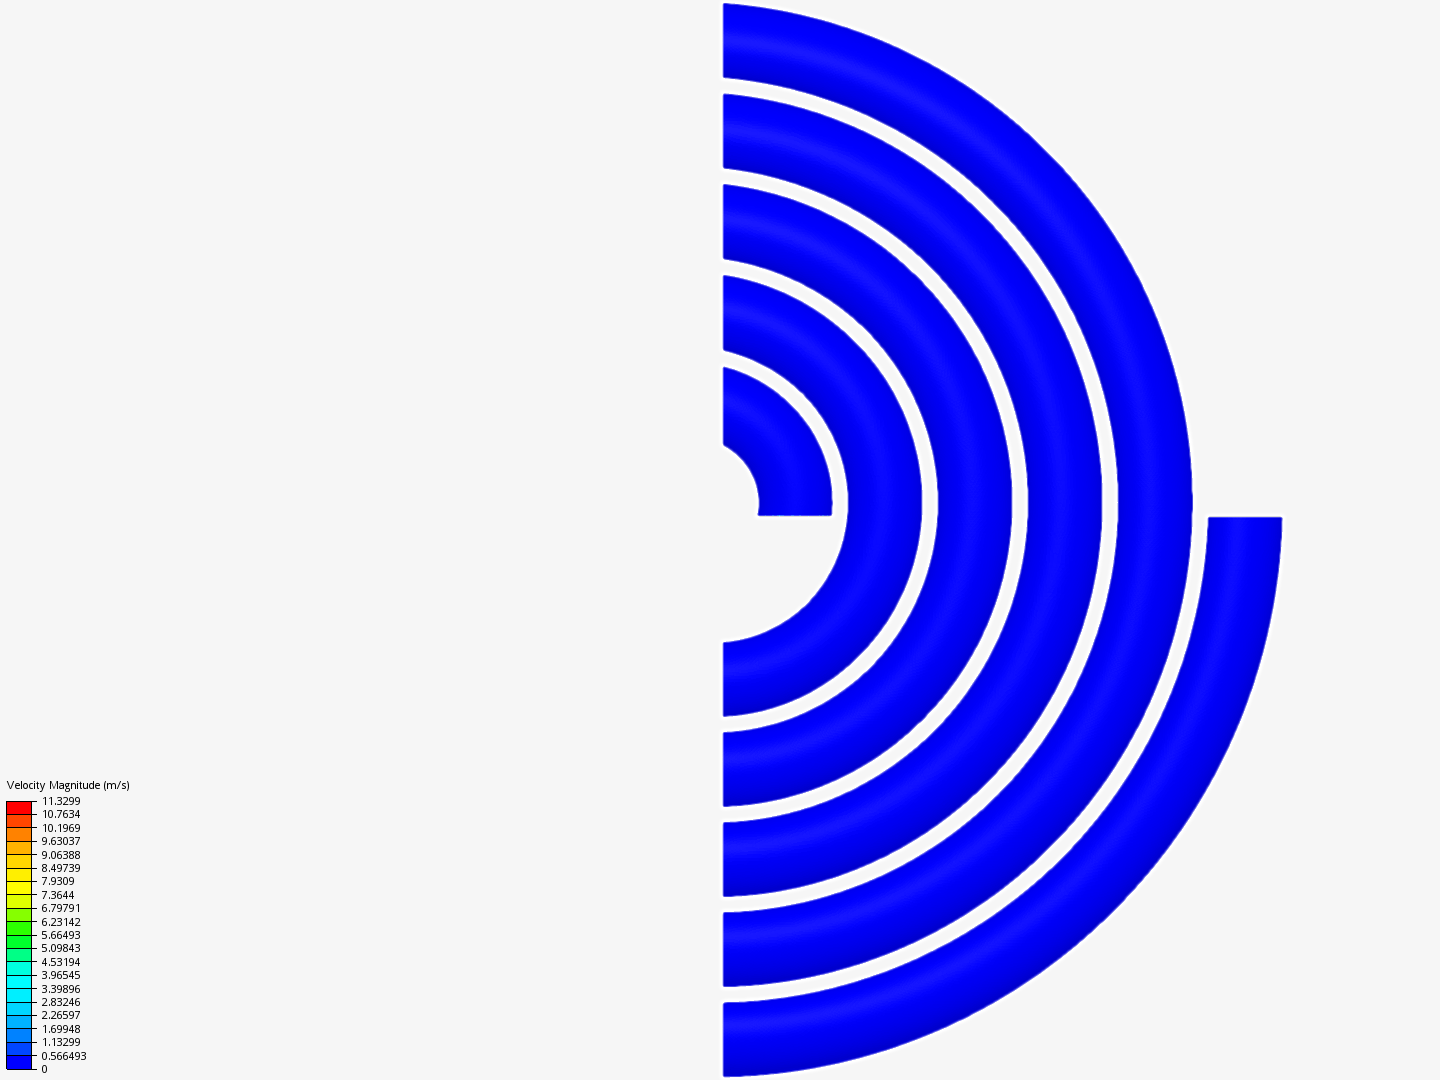 spiral2 image